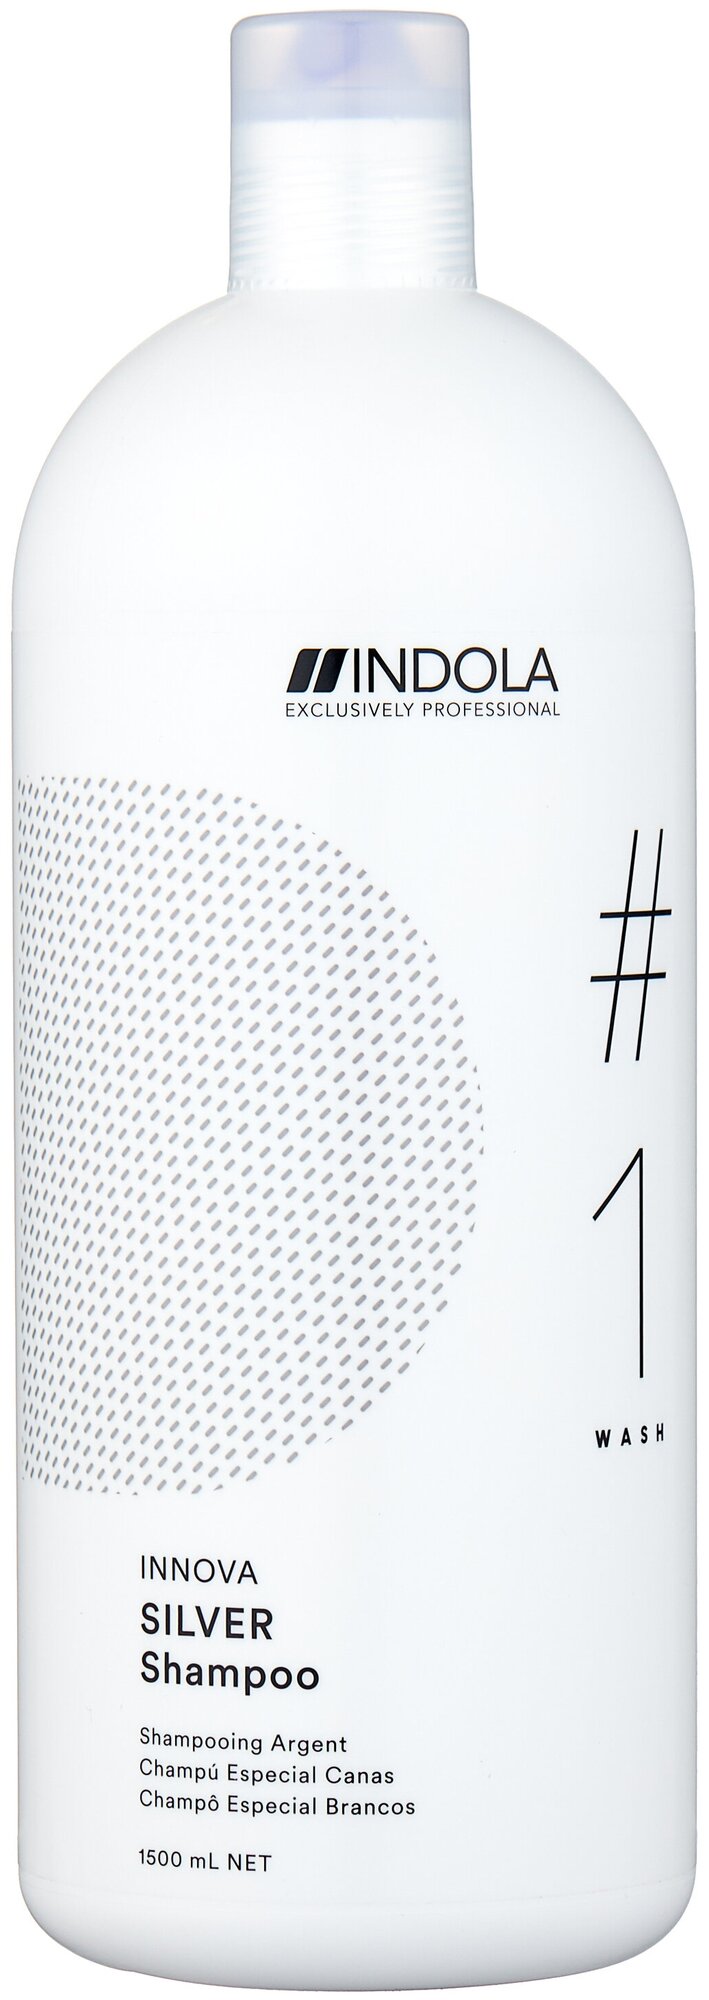   Indola Silver Shampoo 1500